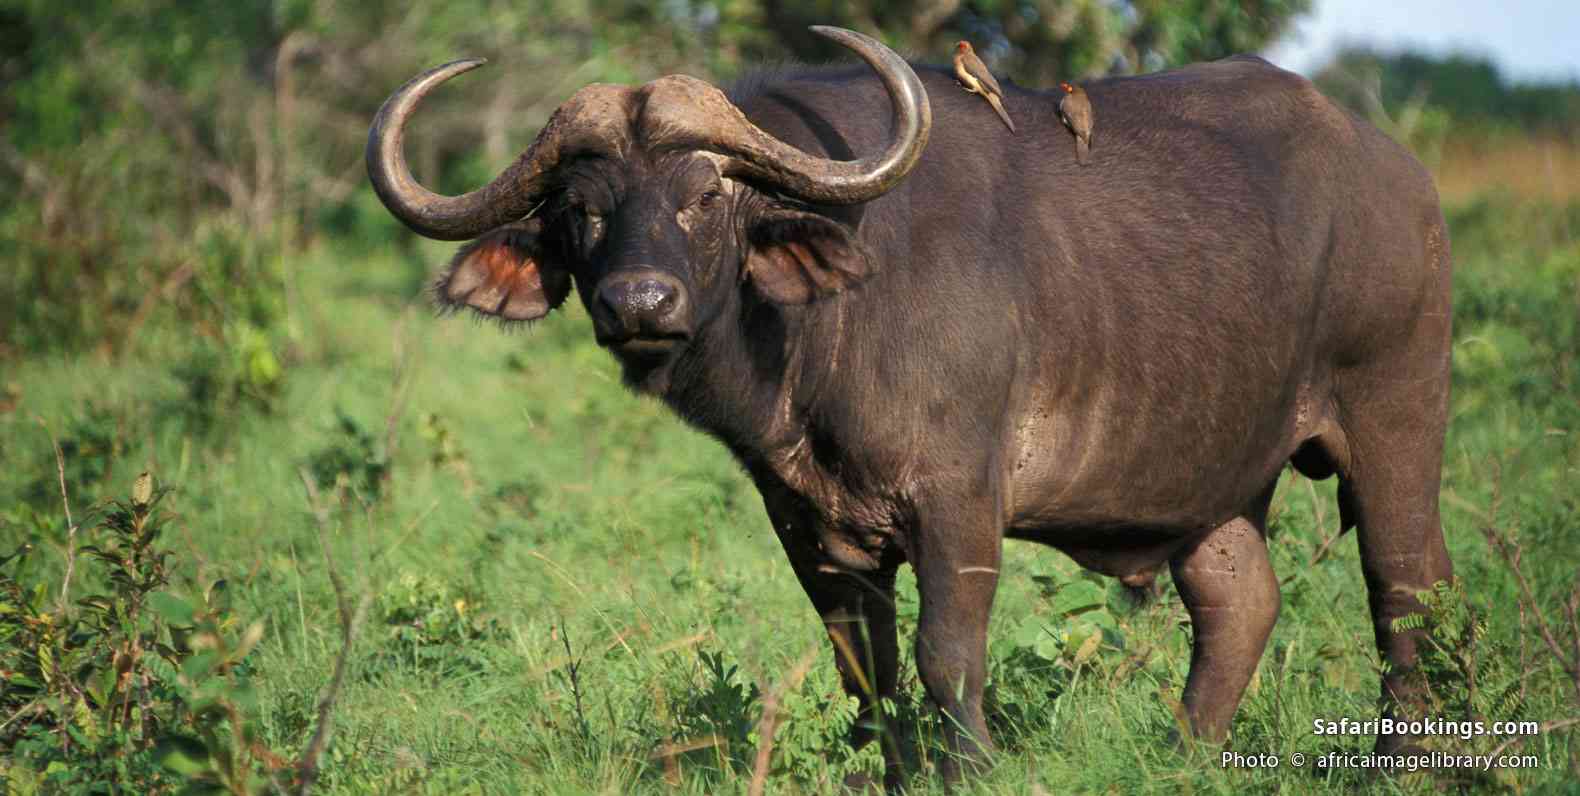 Buffalo with birds on its back, Shimba Hills National Reserve